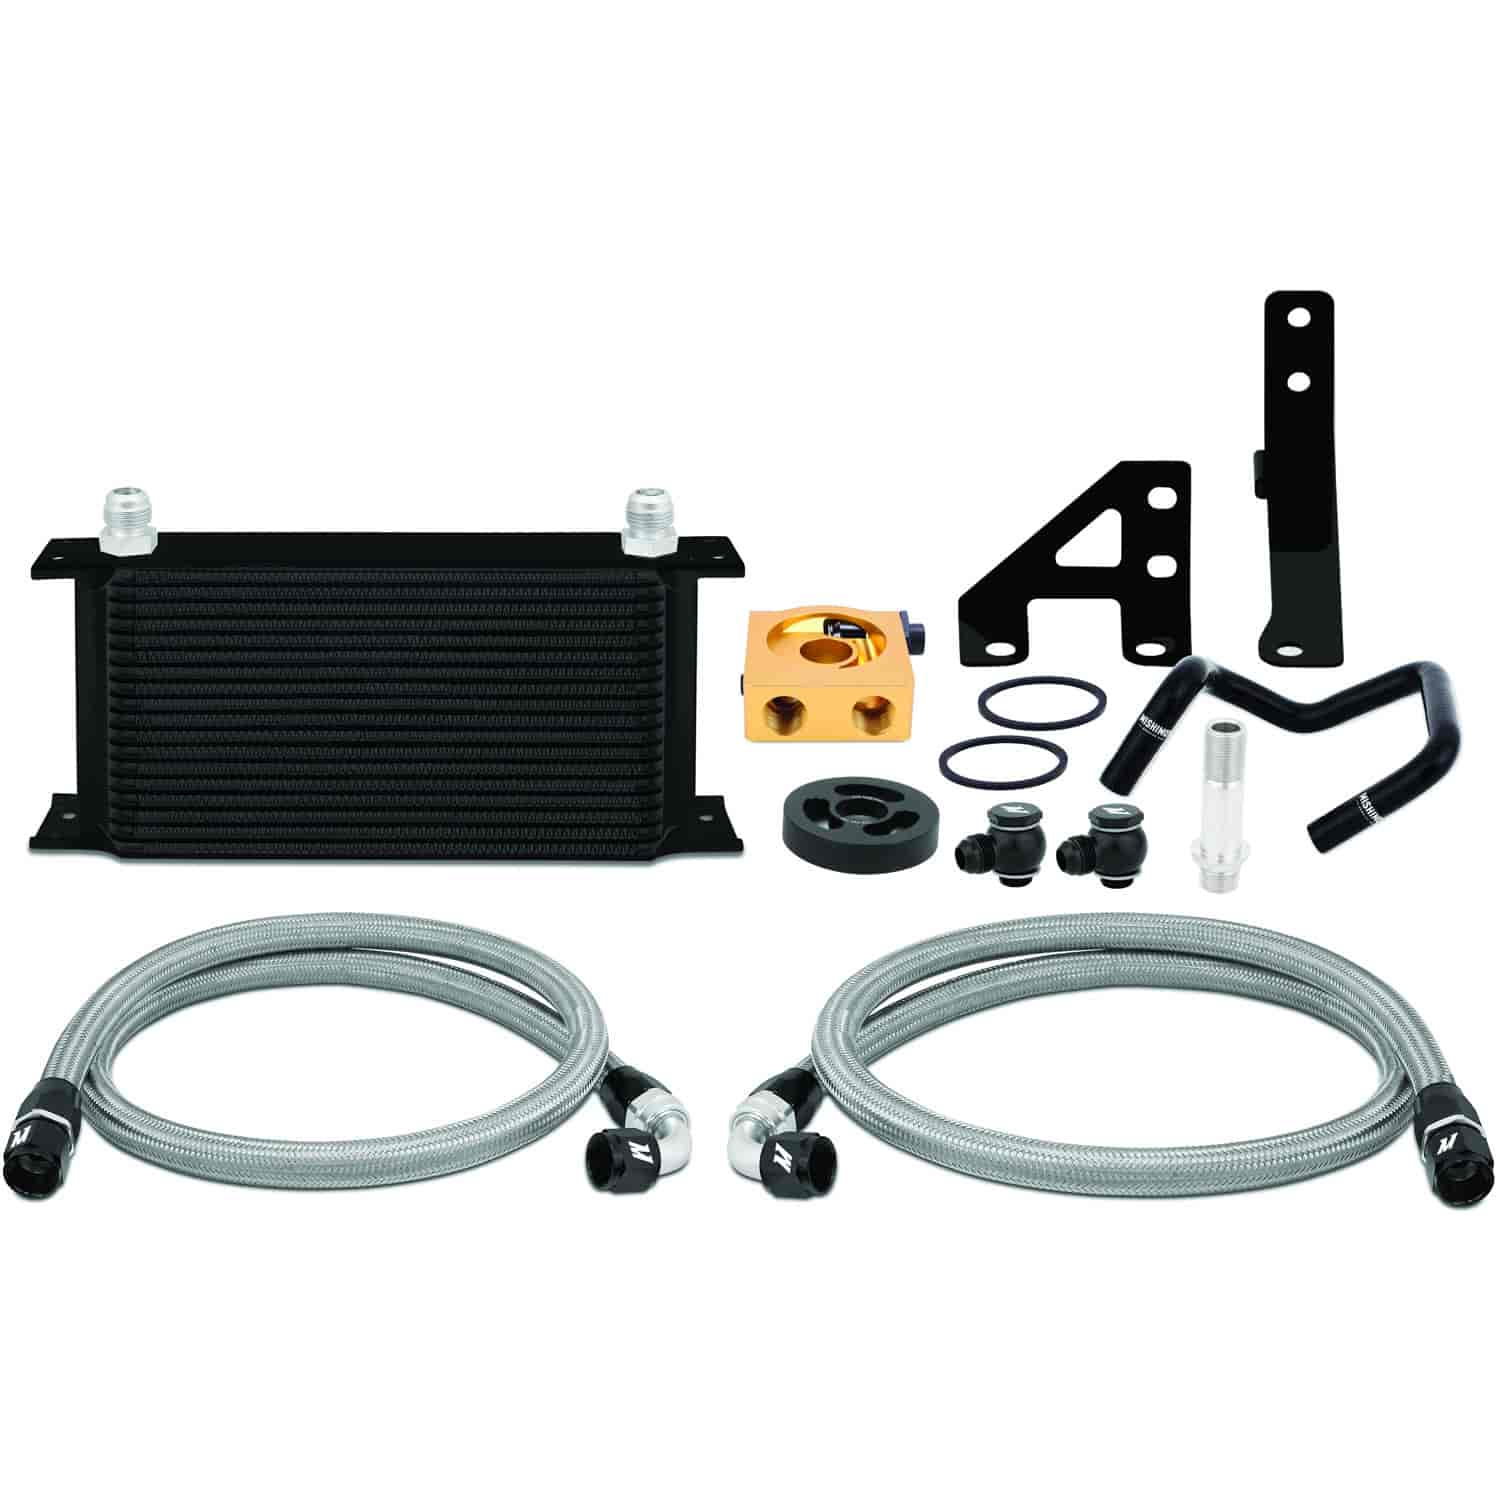 Subaru WRX Thermostatic Oil Cooler Kit - MFG Part No. MMOC-WRX-15TBK